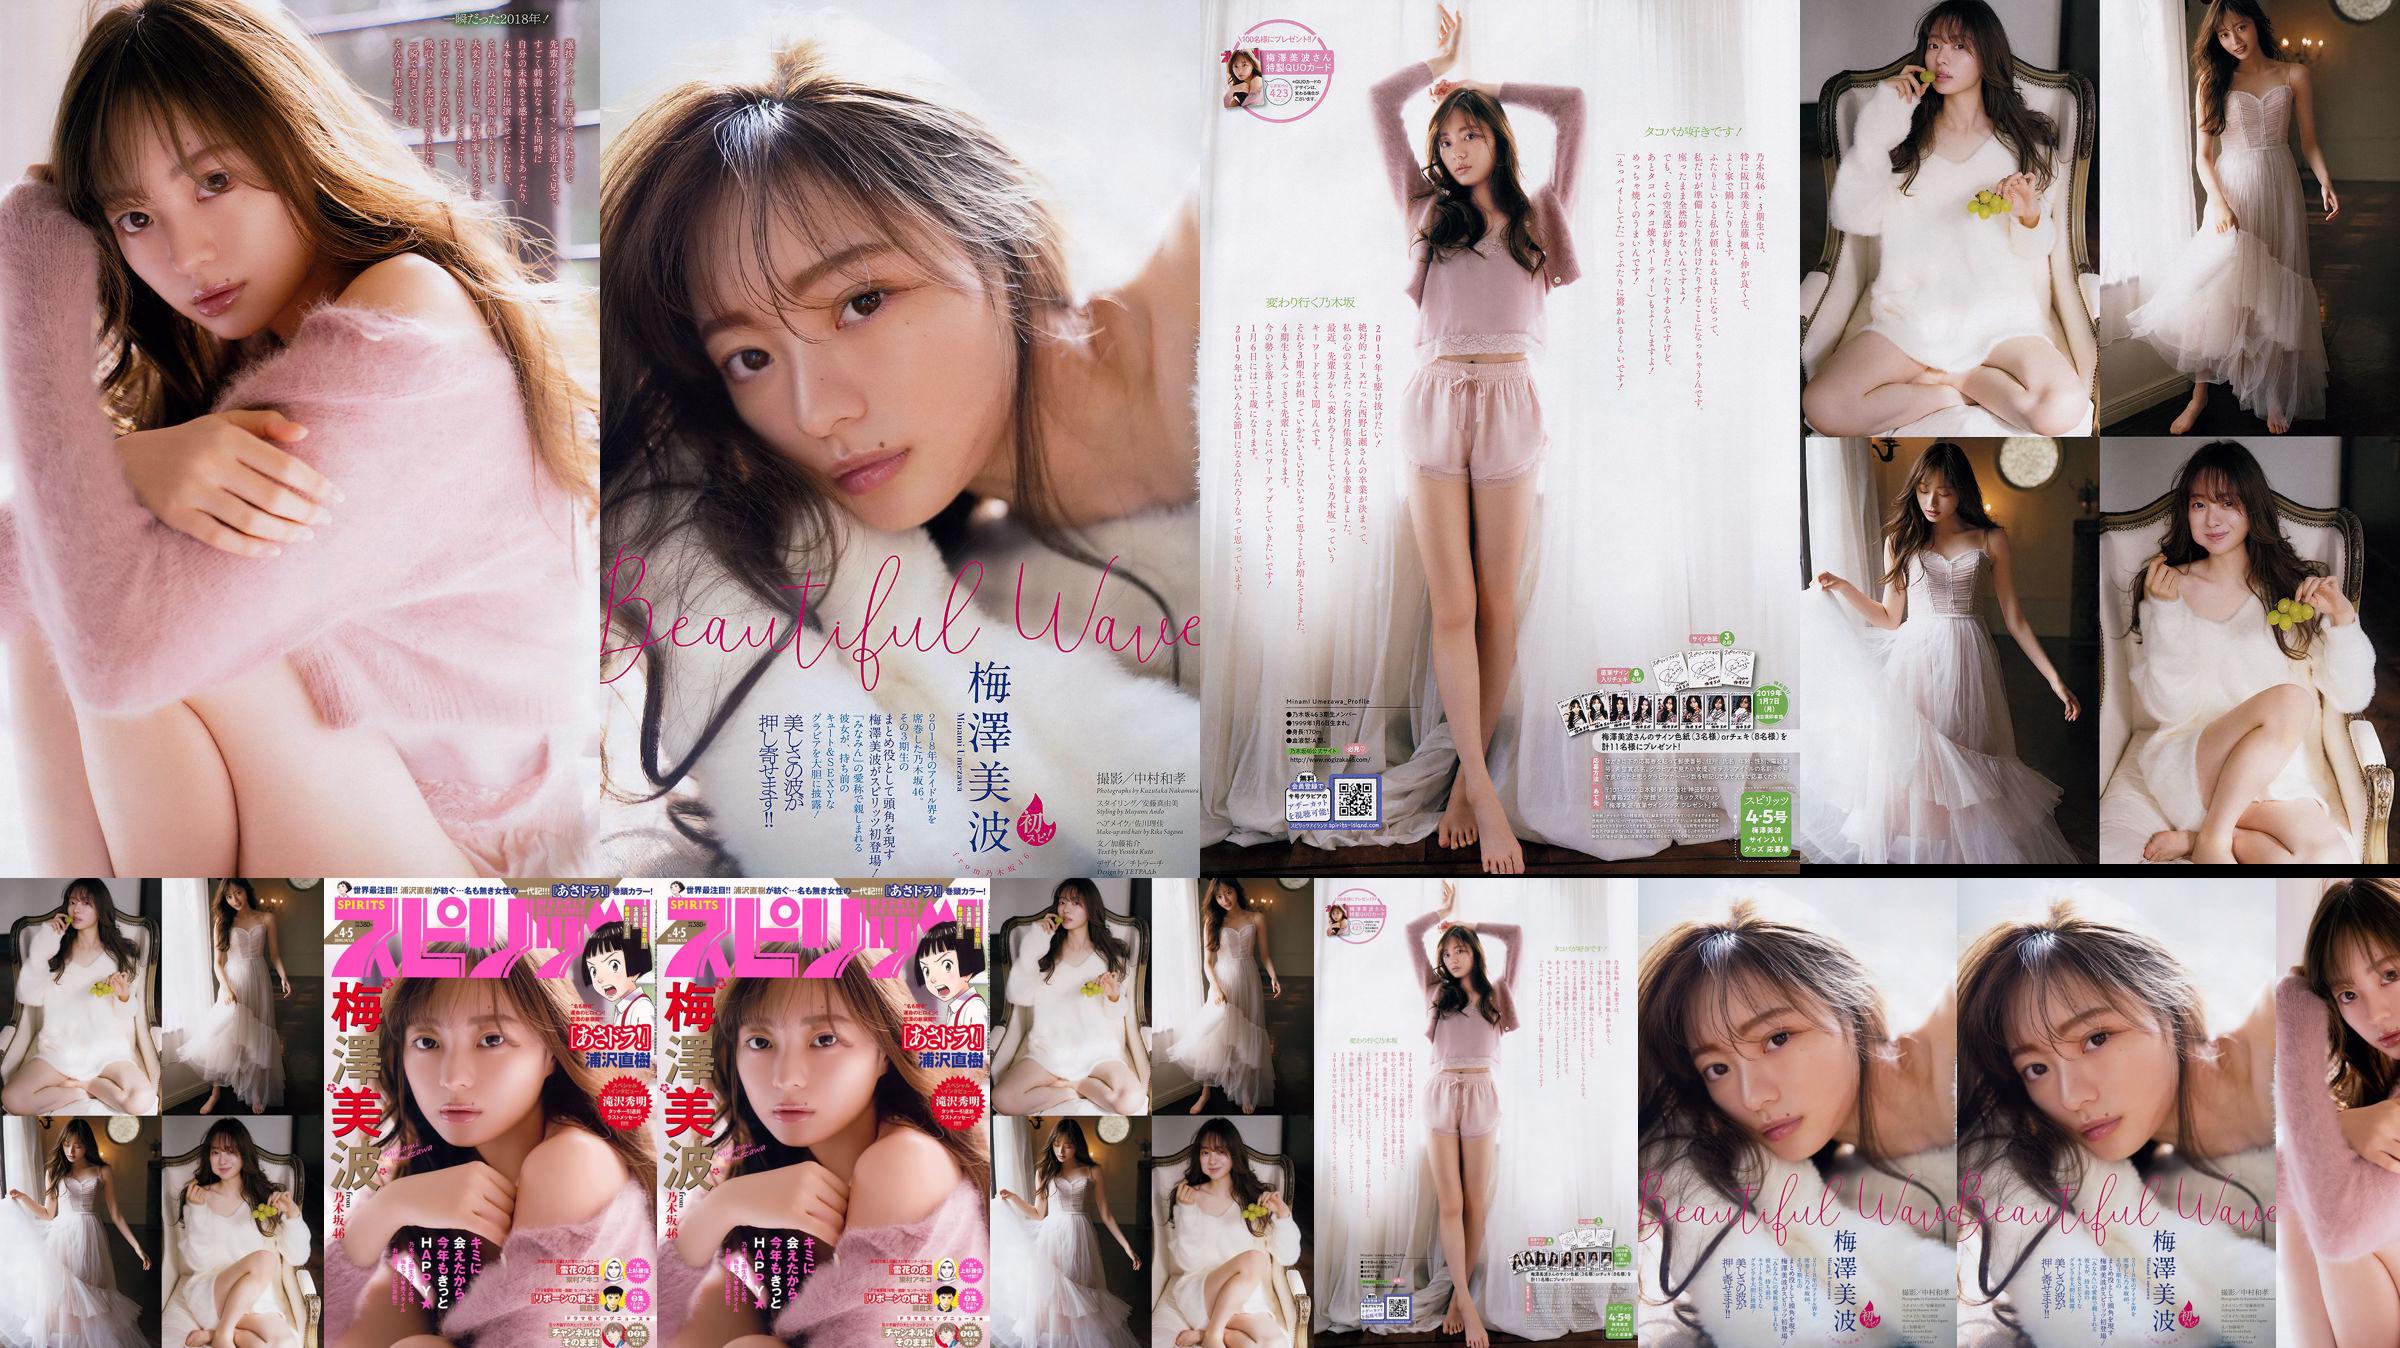 [Semangat Komik Besar Mingguan] Minami Umezawa 2019 Majalah Foto No. 04-05 No.0169d3 Halaman 1